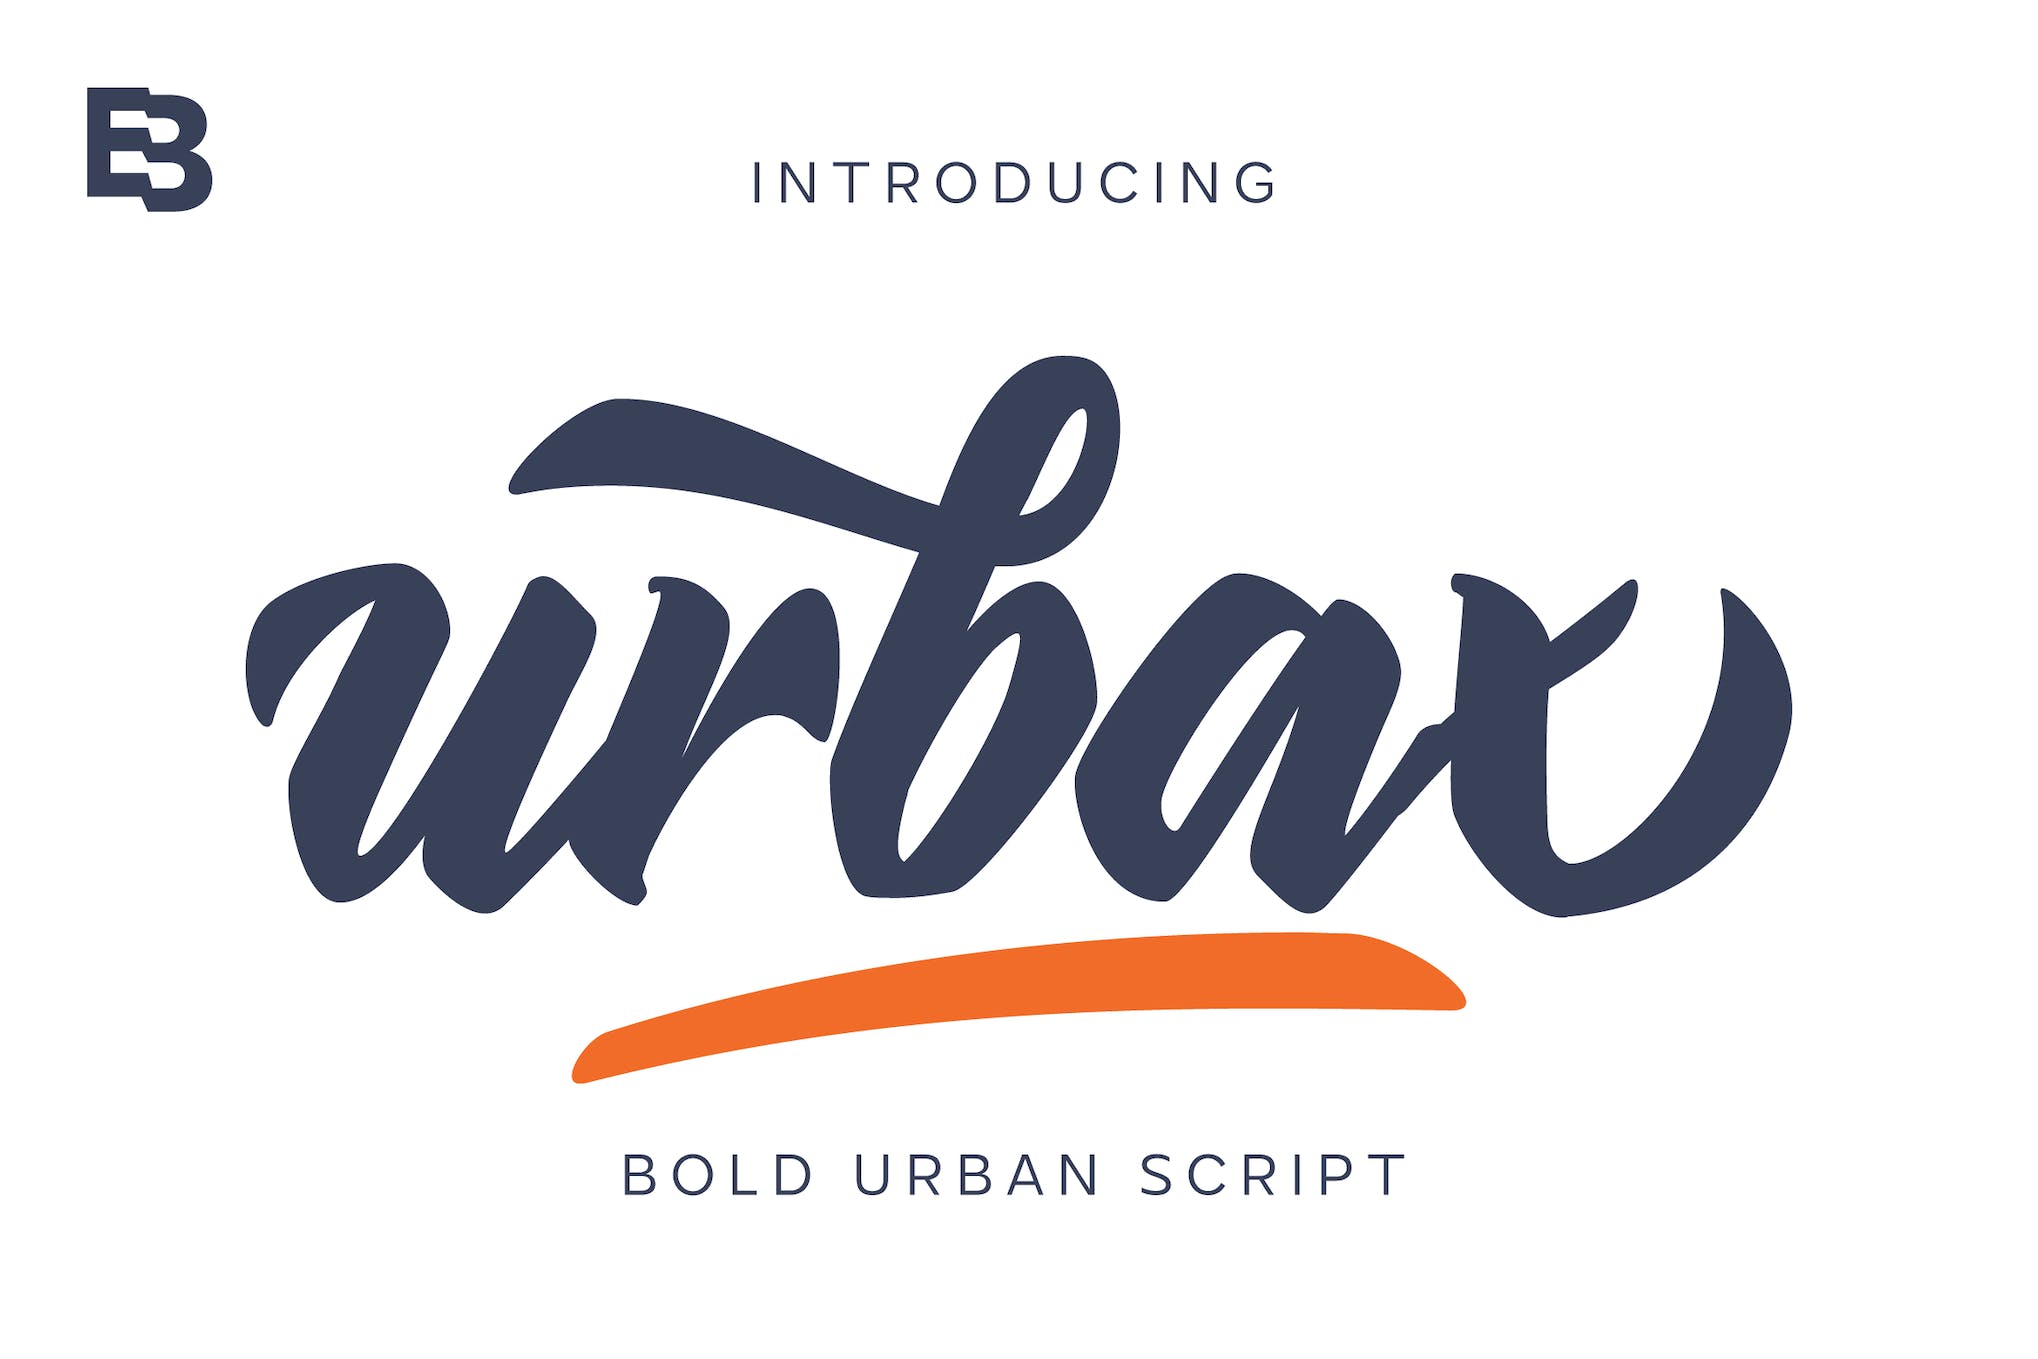 Urbax - Modern Urban Font